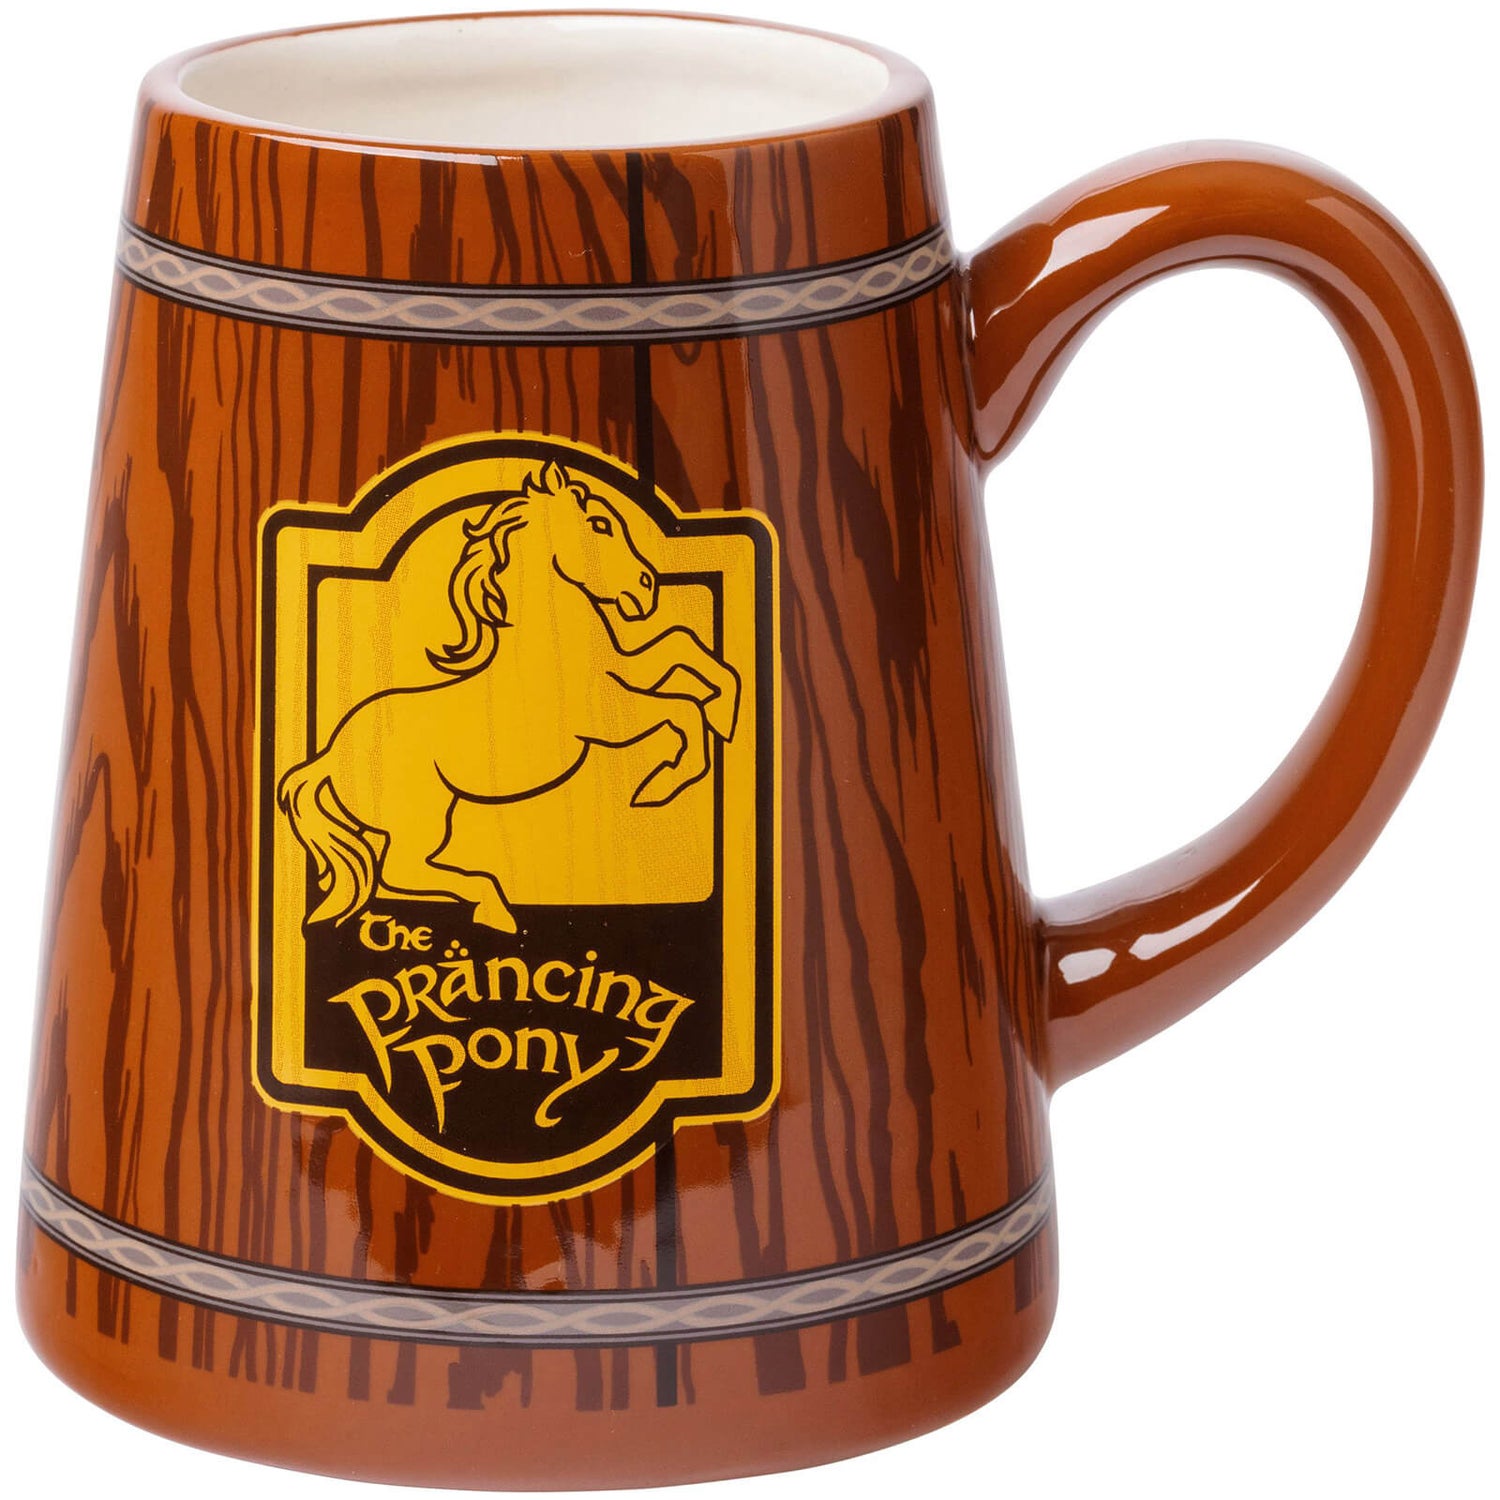 Lord of the Rings Prancing Pony Sculpted Ceramic Mug